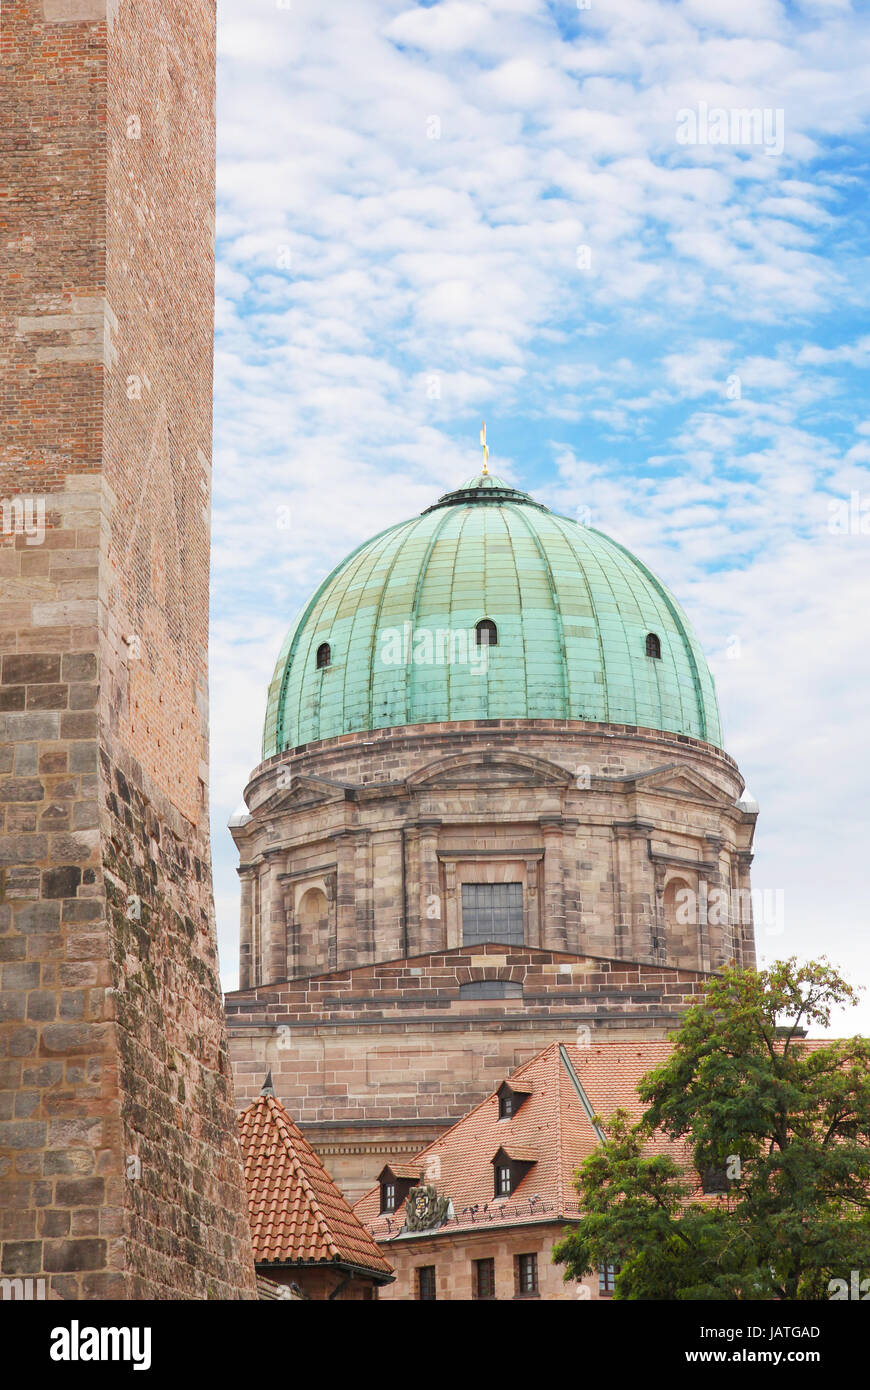 Cupola di Santa Elisabetta chiesa o Elisabethkirche a Norimberga città vecchia, Norimberga, Franconia, Baviera, Germania. Medievale Torre Bianca o Weisser Turm è in primo piano. Foto Stock